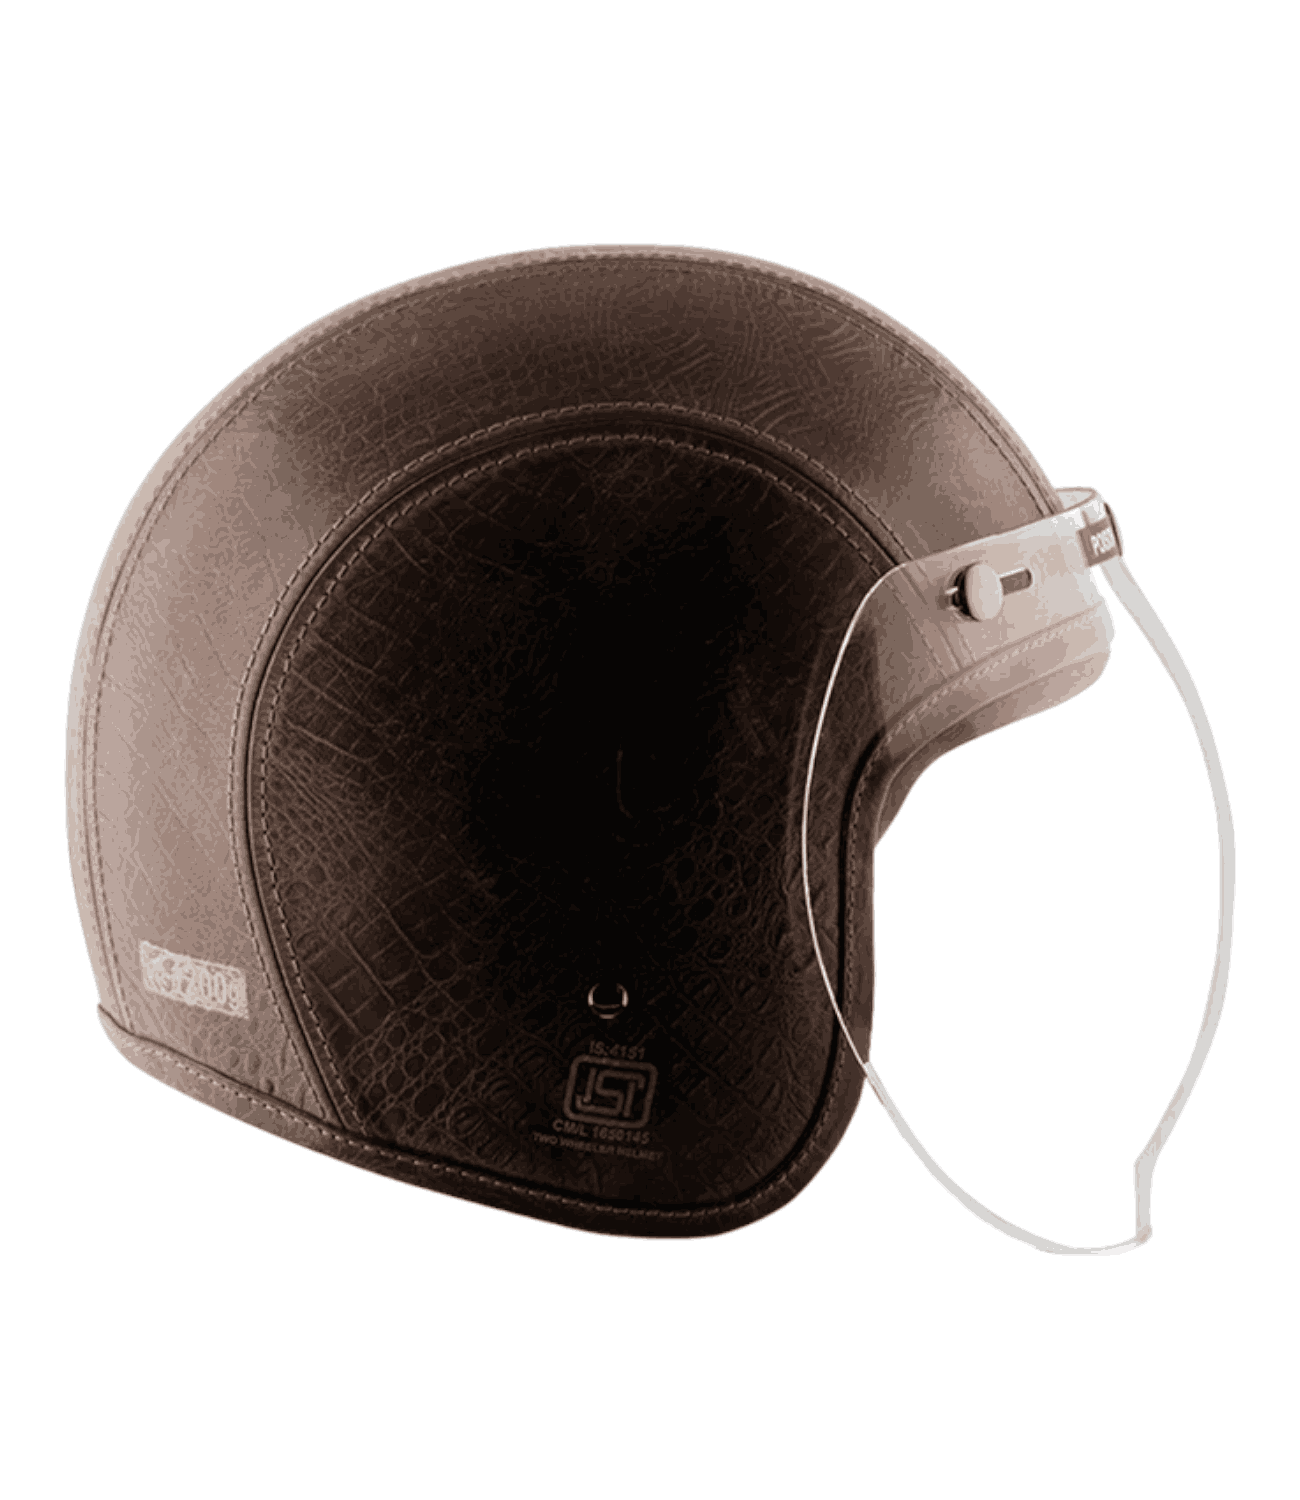 Axor Retro Jet Leather Helmet Poison-Coco Brown